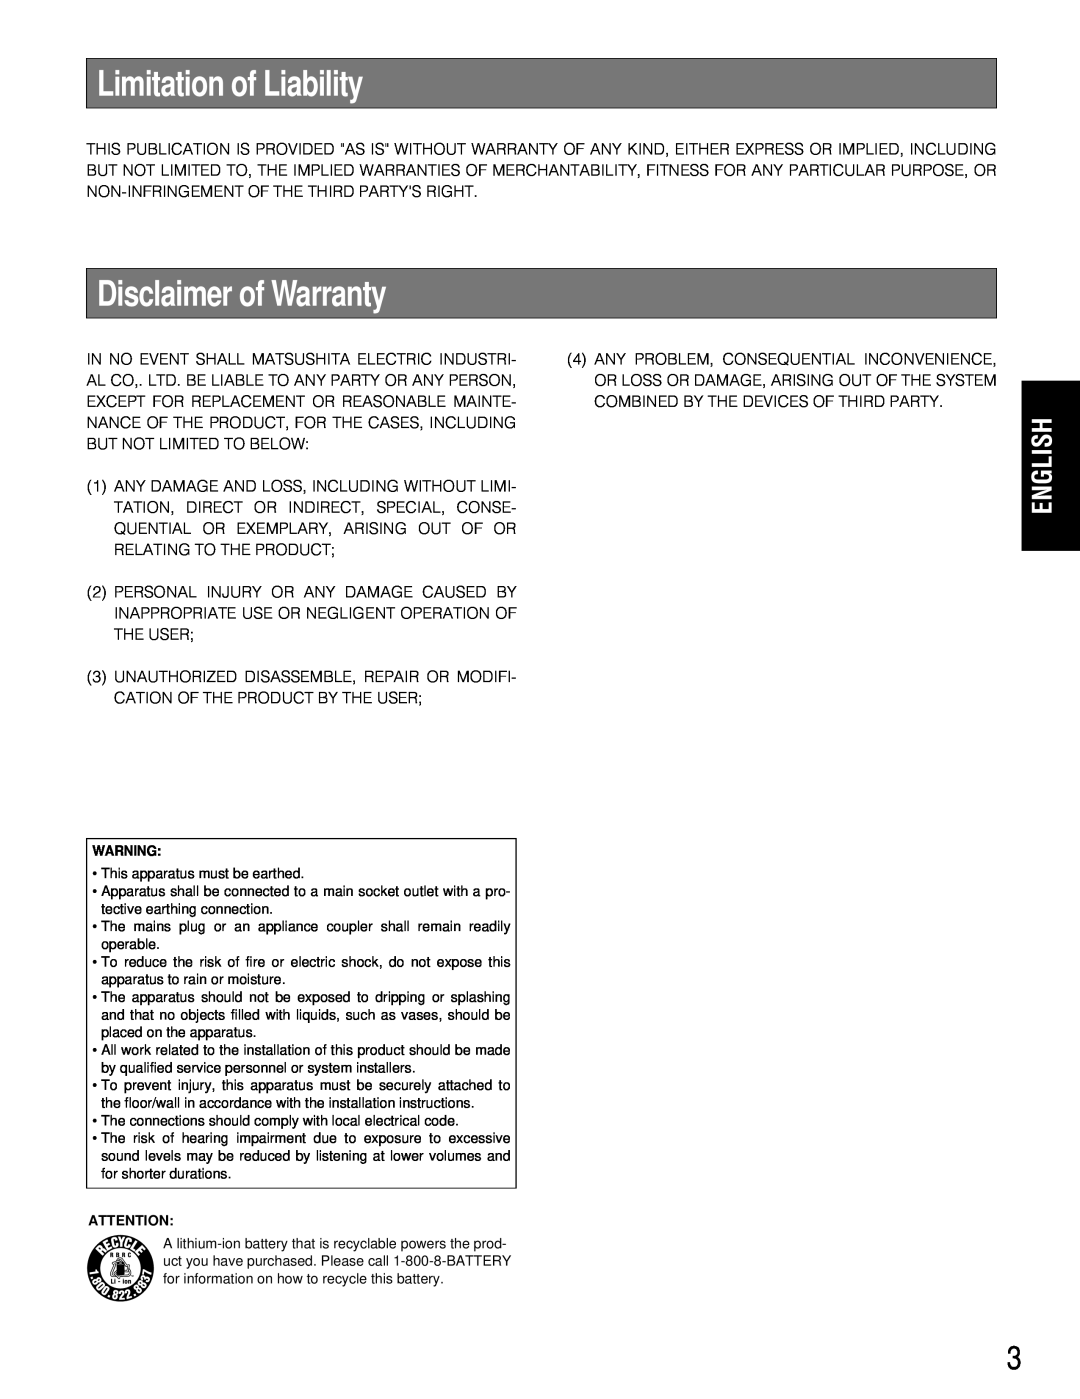 Technics WX-H3050 manual Limitation of Liability, Disclaimer of Warranty, English 